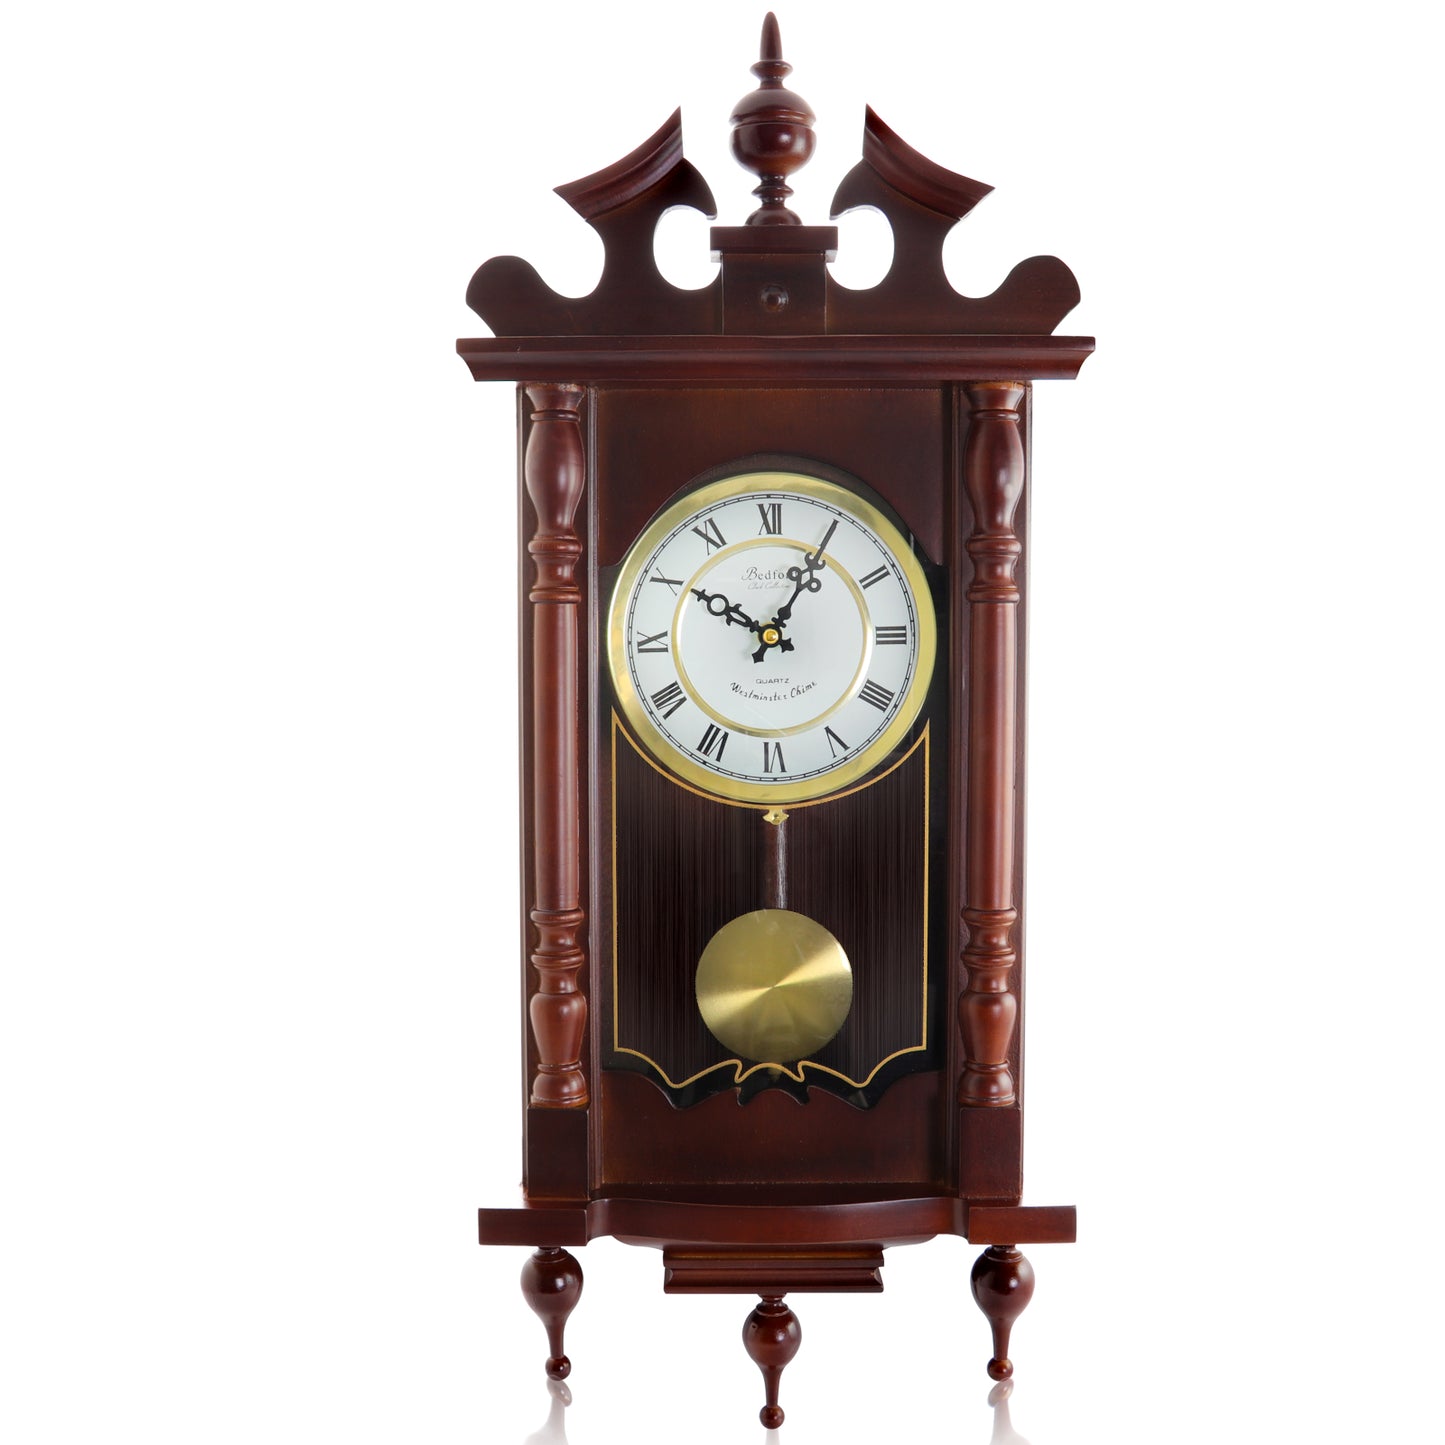 BEDFORD CLOCK COLLECTION Bedford Clock Collection Classic 31 Inch Chiming Pendulum Wall Clock in Cherry Oak Finish